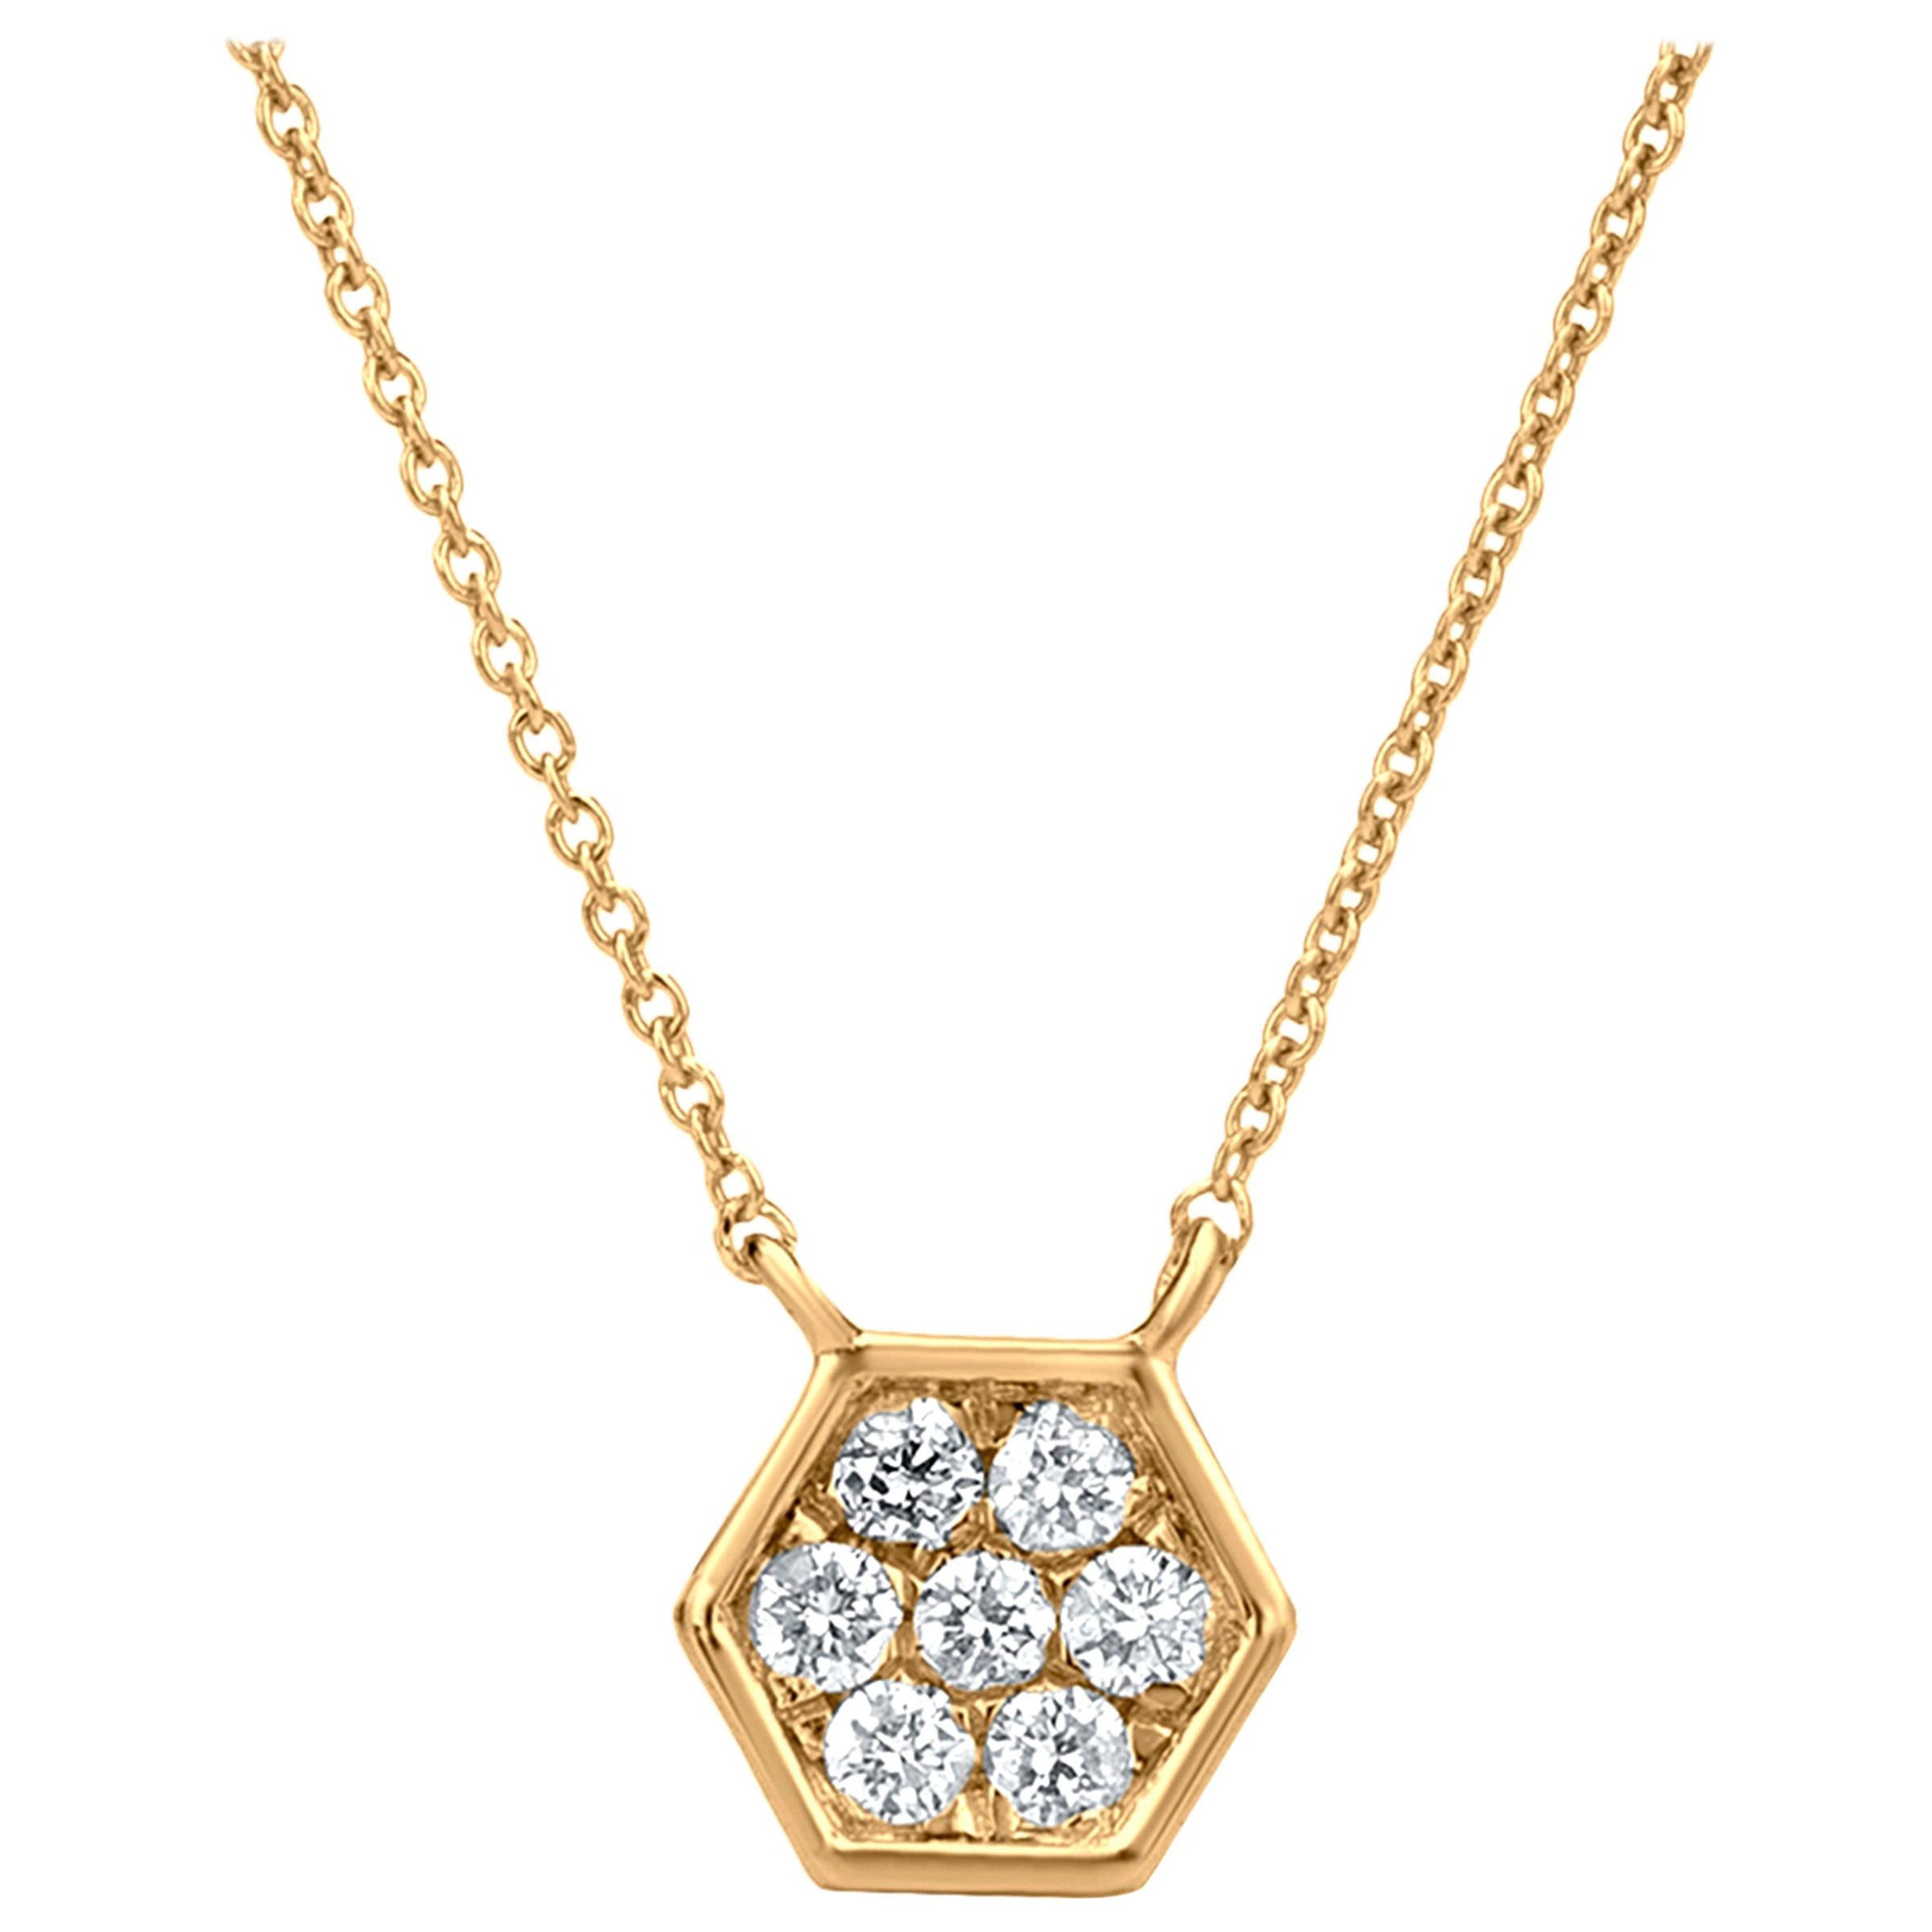 Luxle Hexagonal Diamond Pendant Necklace in 18k Yellow Gold